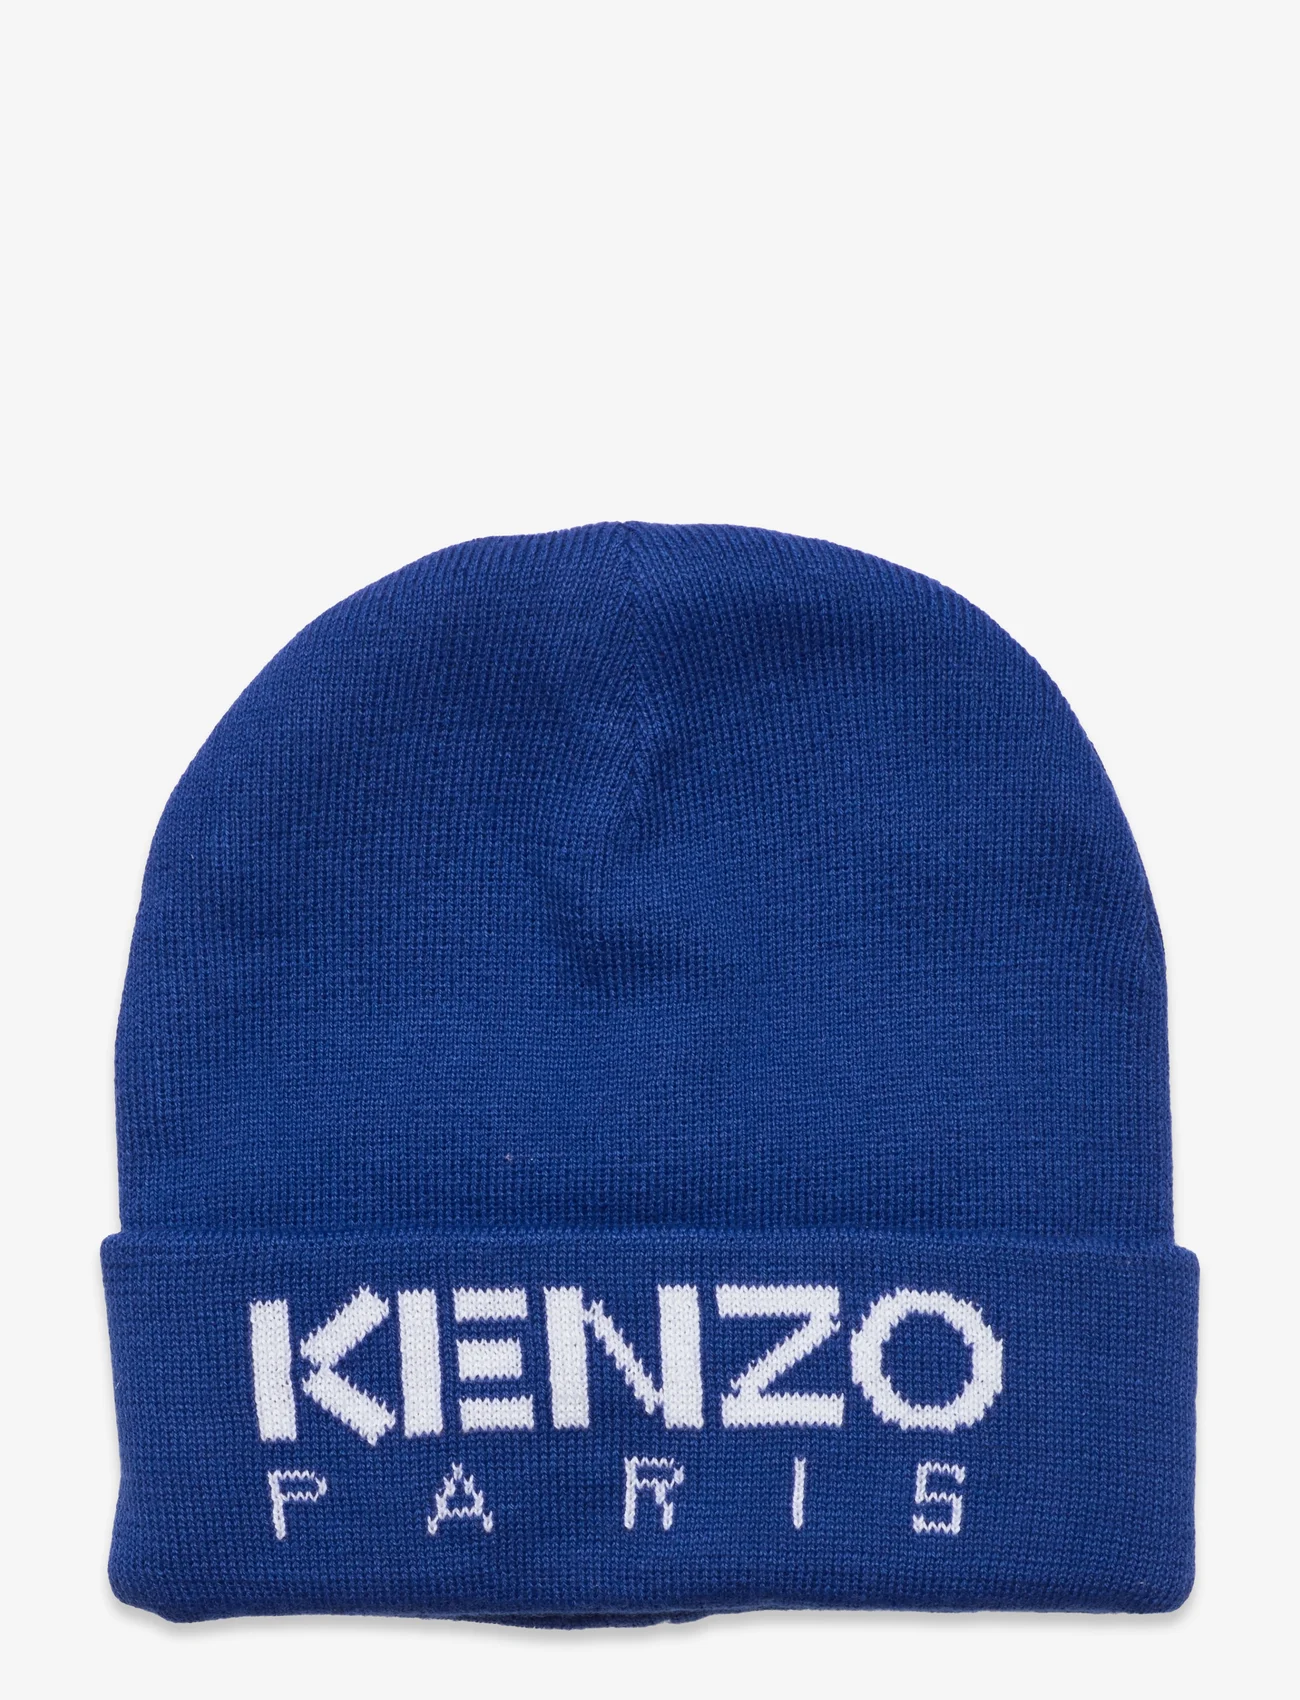 Kenzo - PULL ON HAT - børn - blue - 0